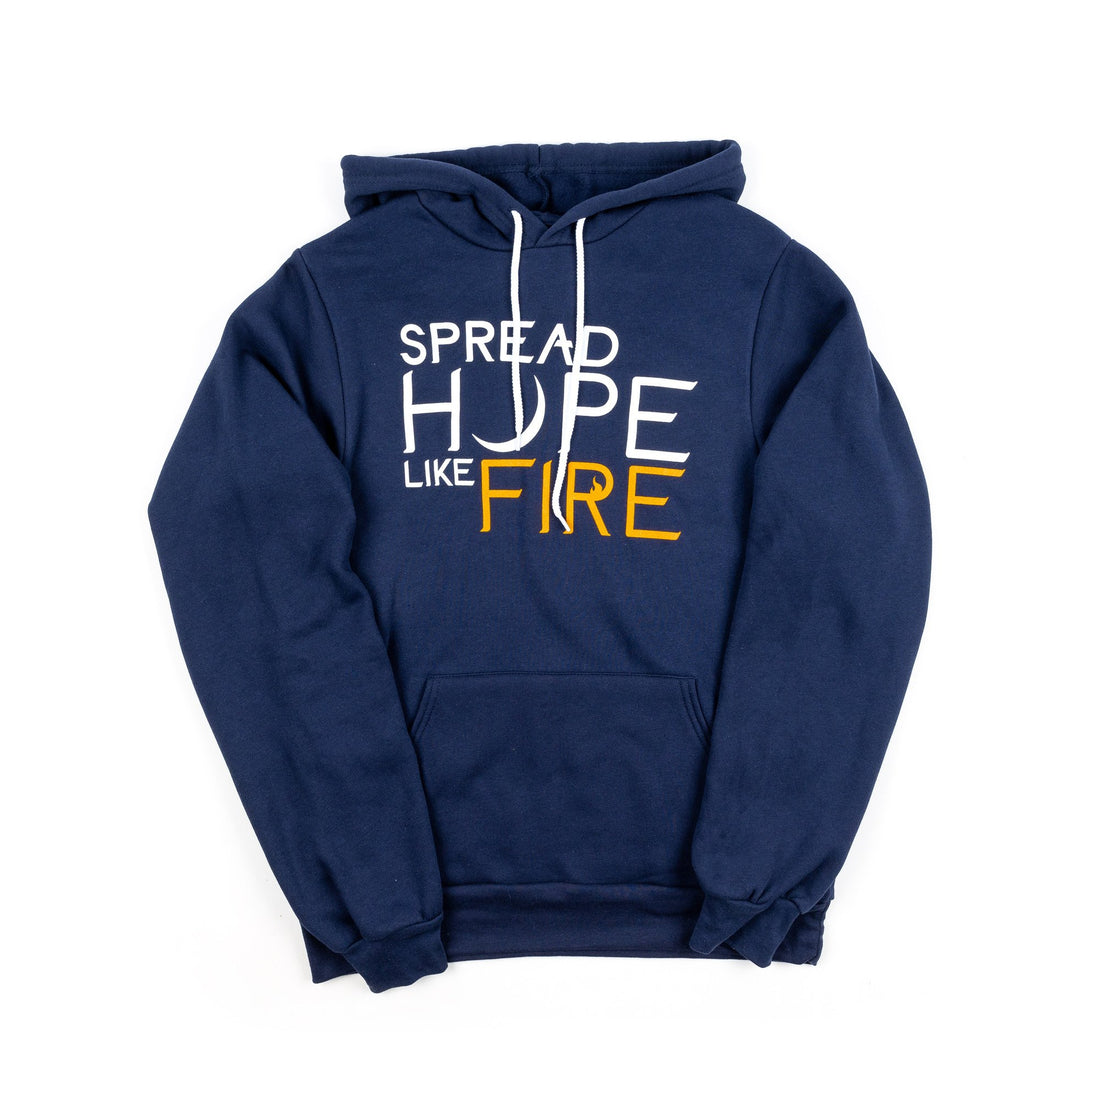 Spread Hope Like Fire Pullover Hoodie Navy